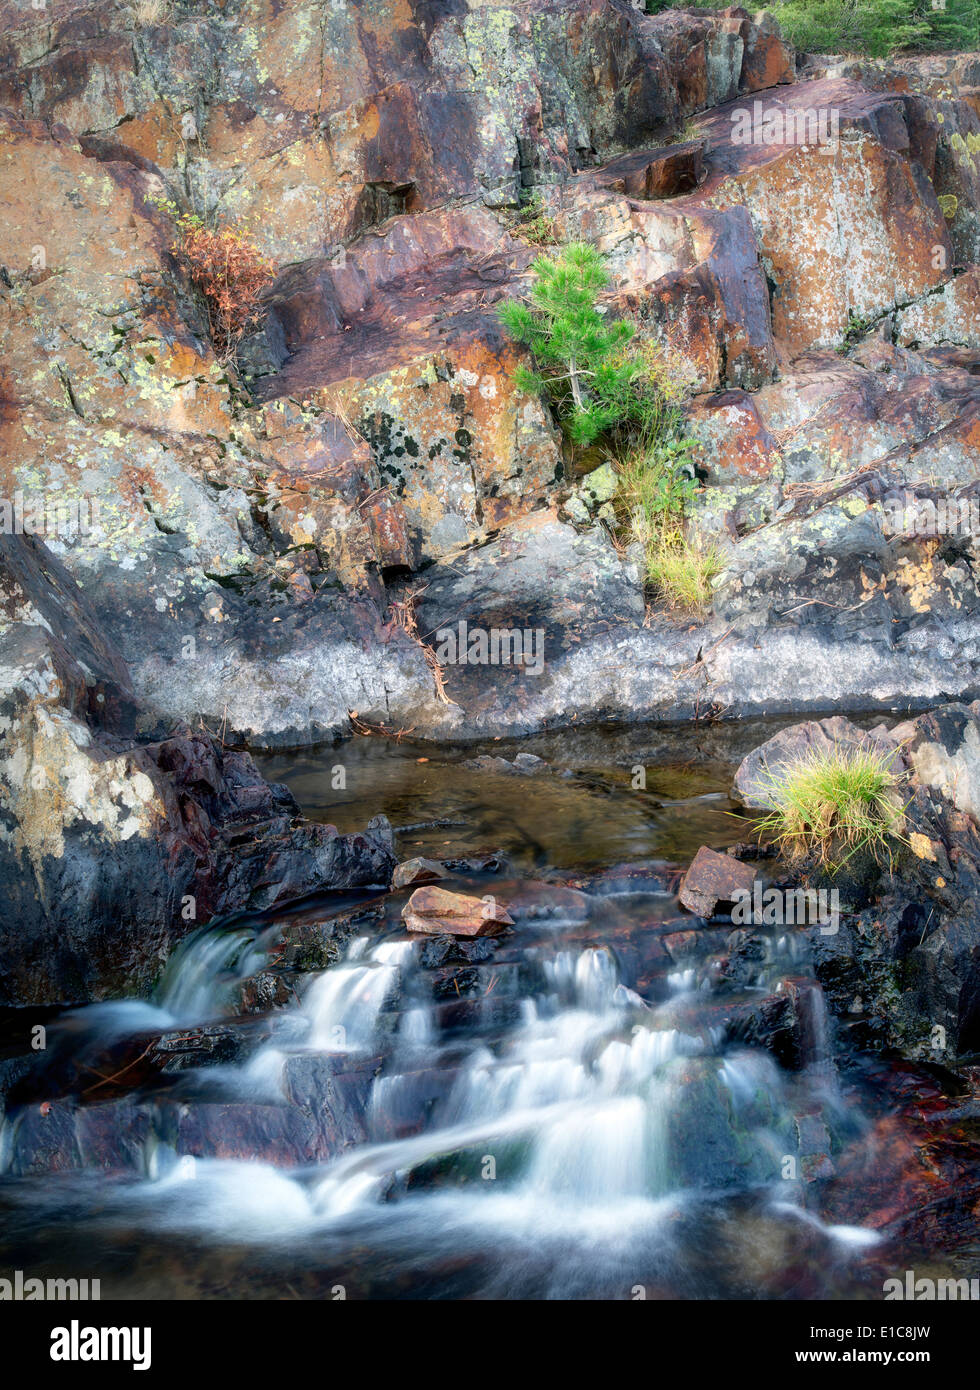 Small waterfall with lichen covered rocks on Glen Alpine Creek near Fallen Leaf Lake. California Stock Photo